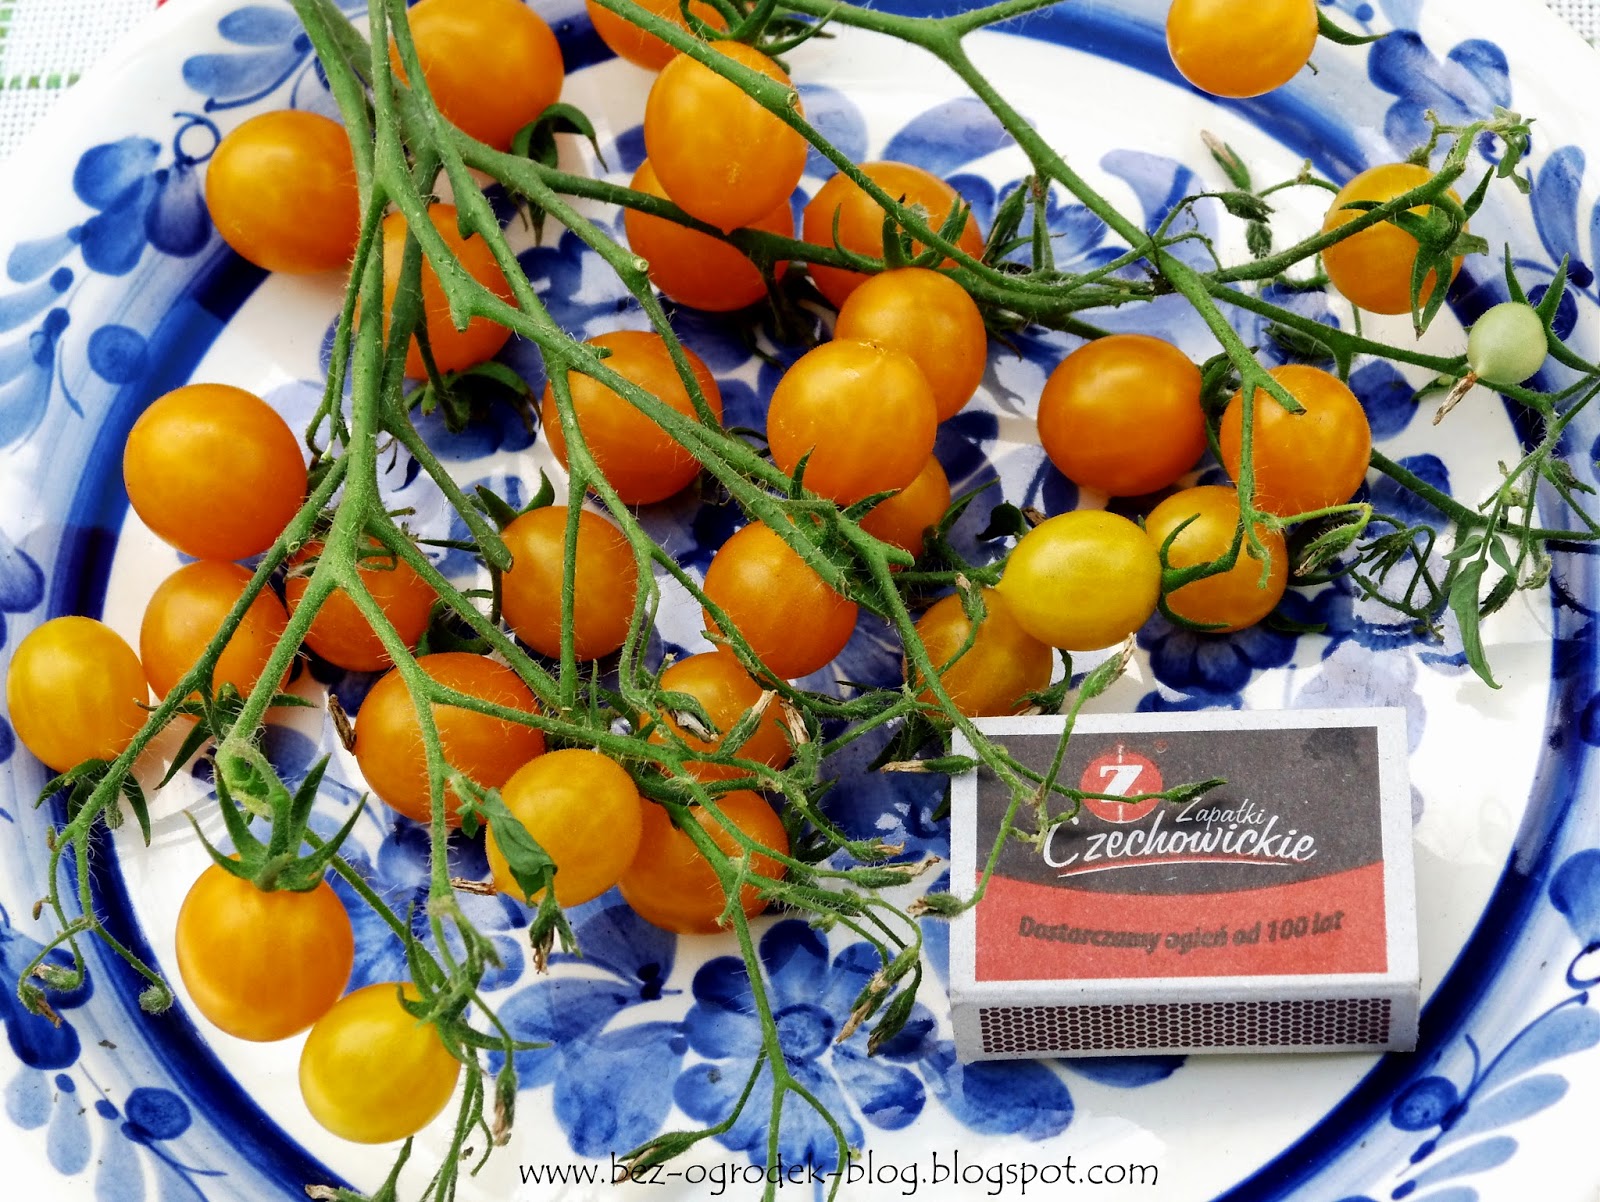 Blondkopfchen cherry tomatoes